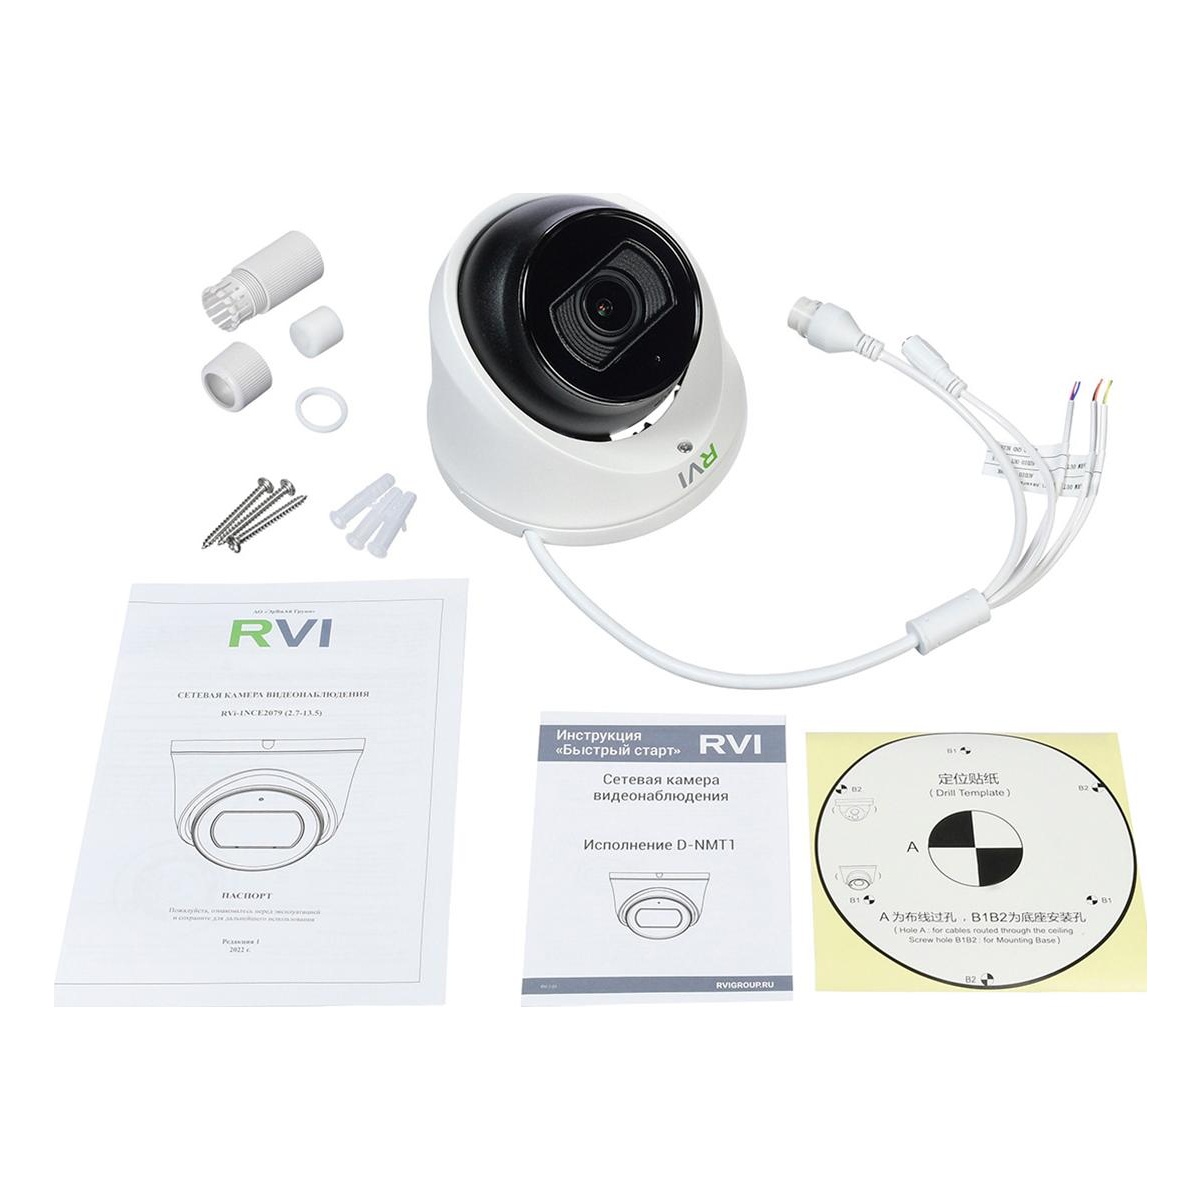 RVi-1NCE2079 (2.7-13.5) white IP видеокамера